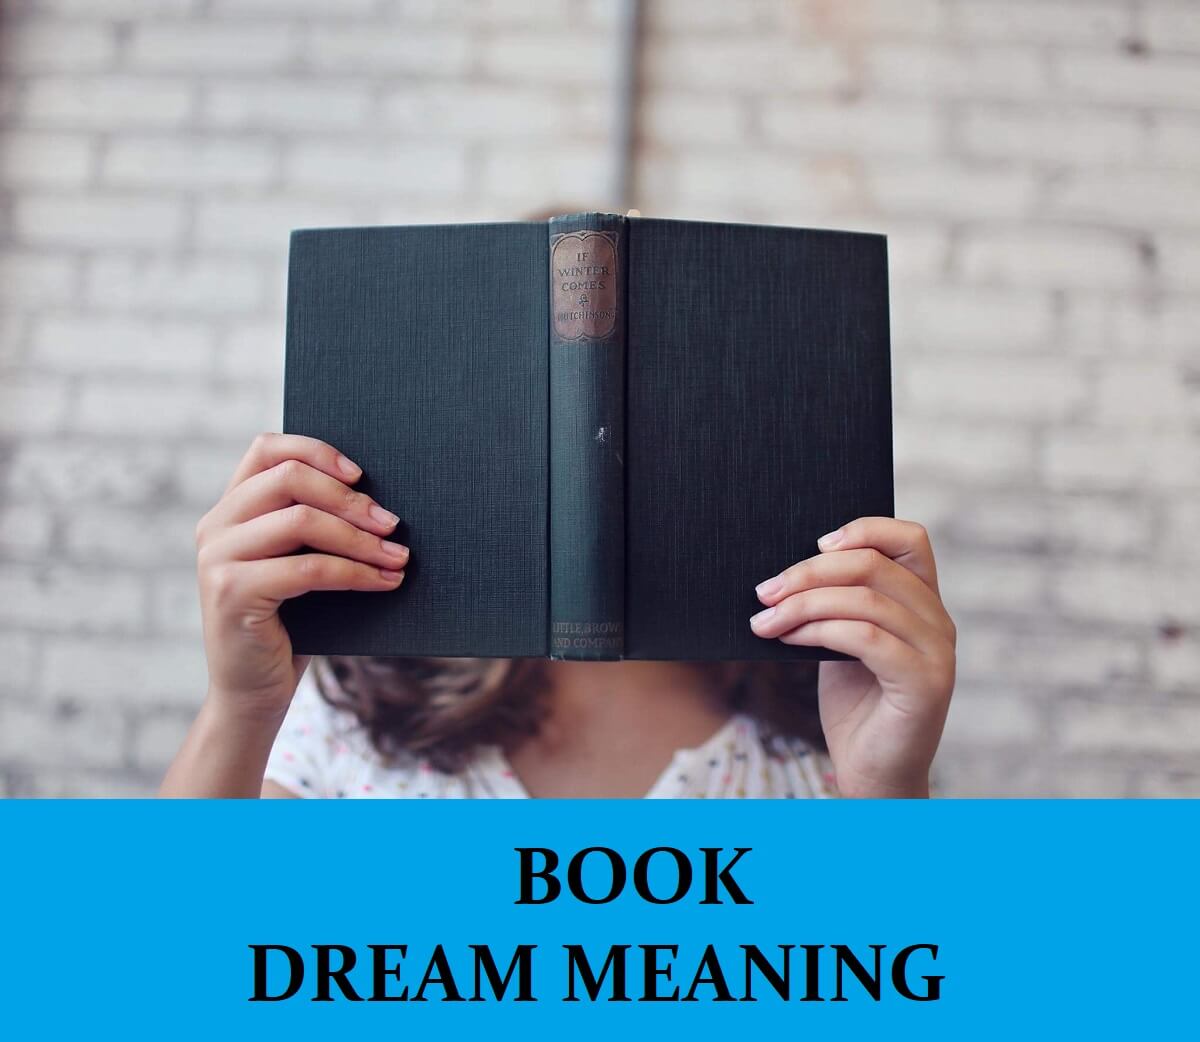 Dream About Books